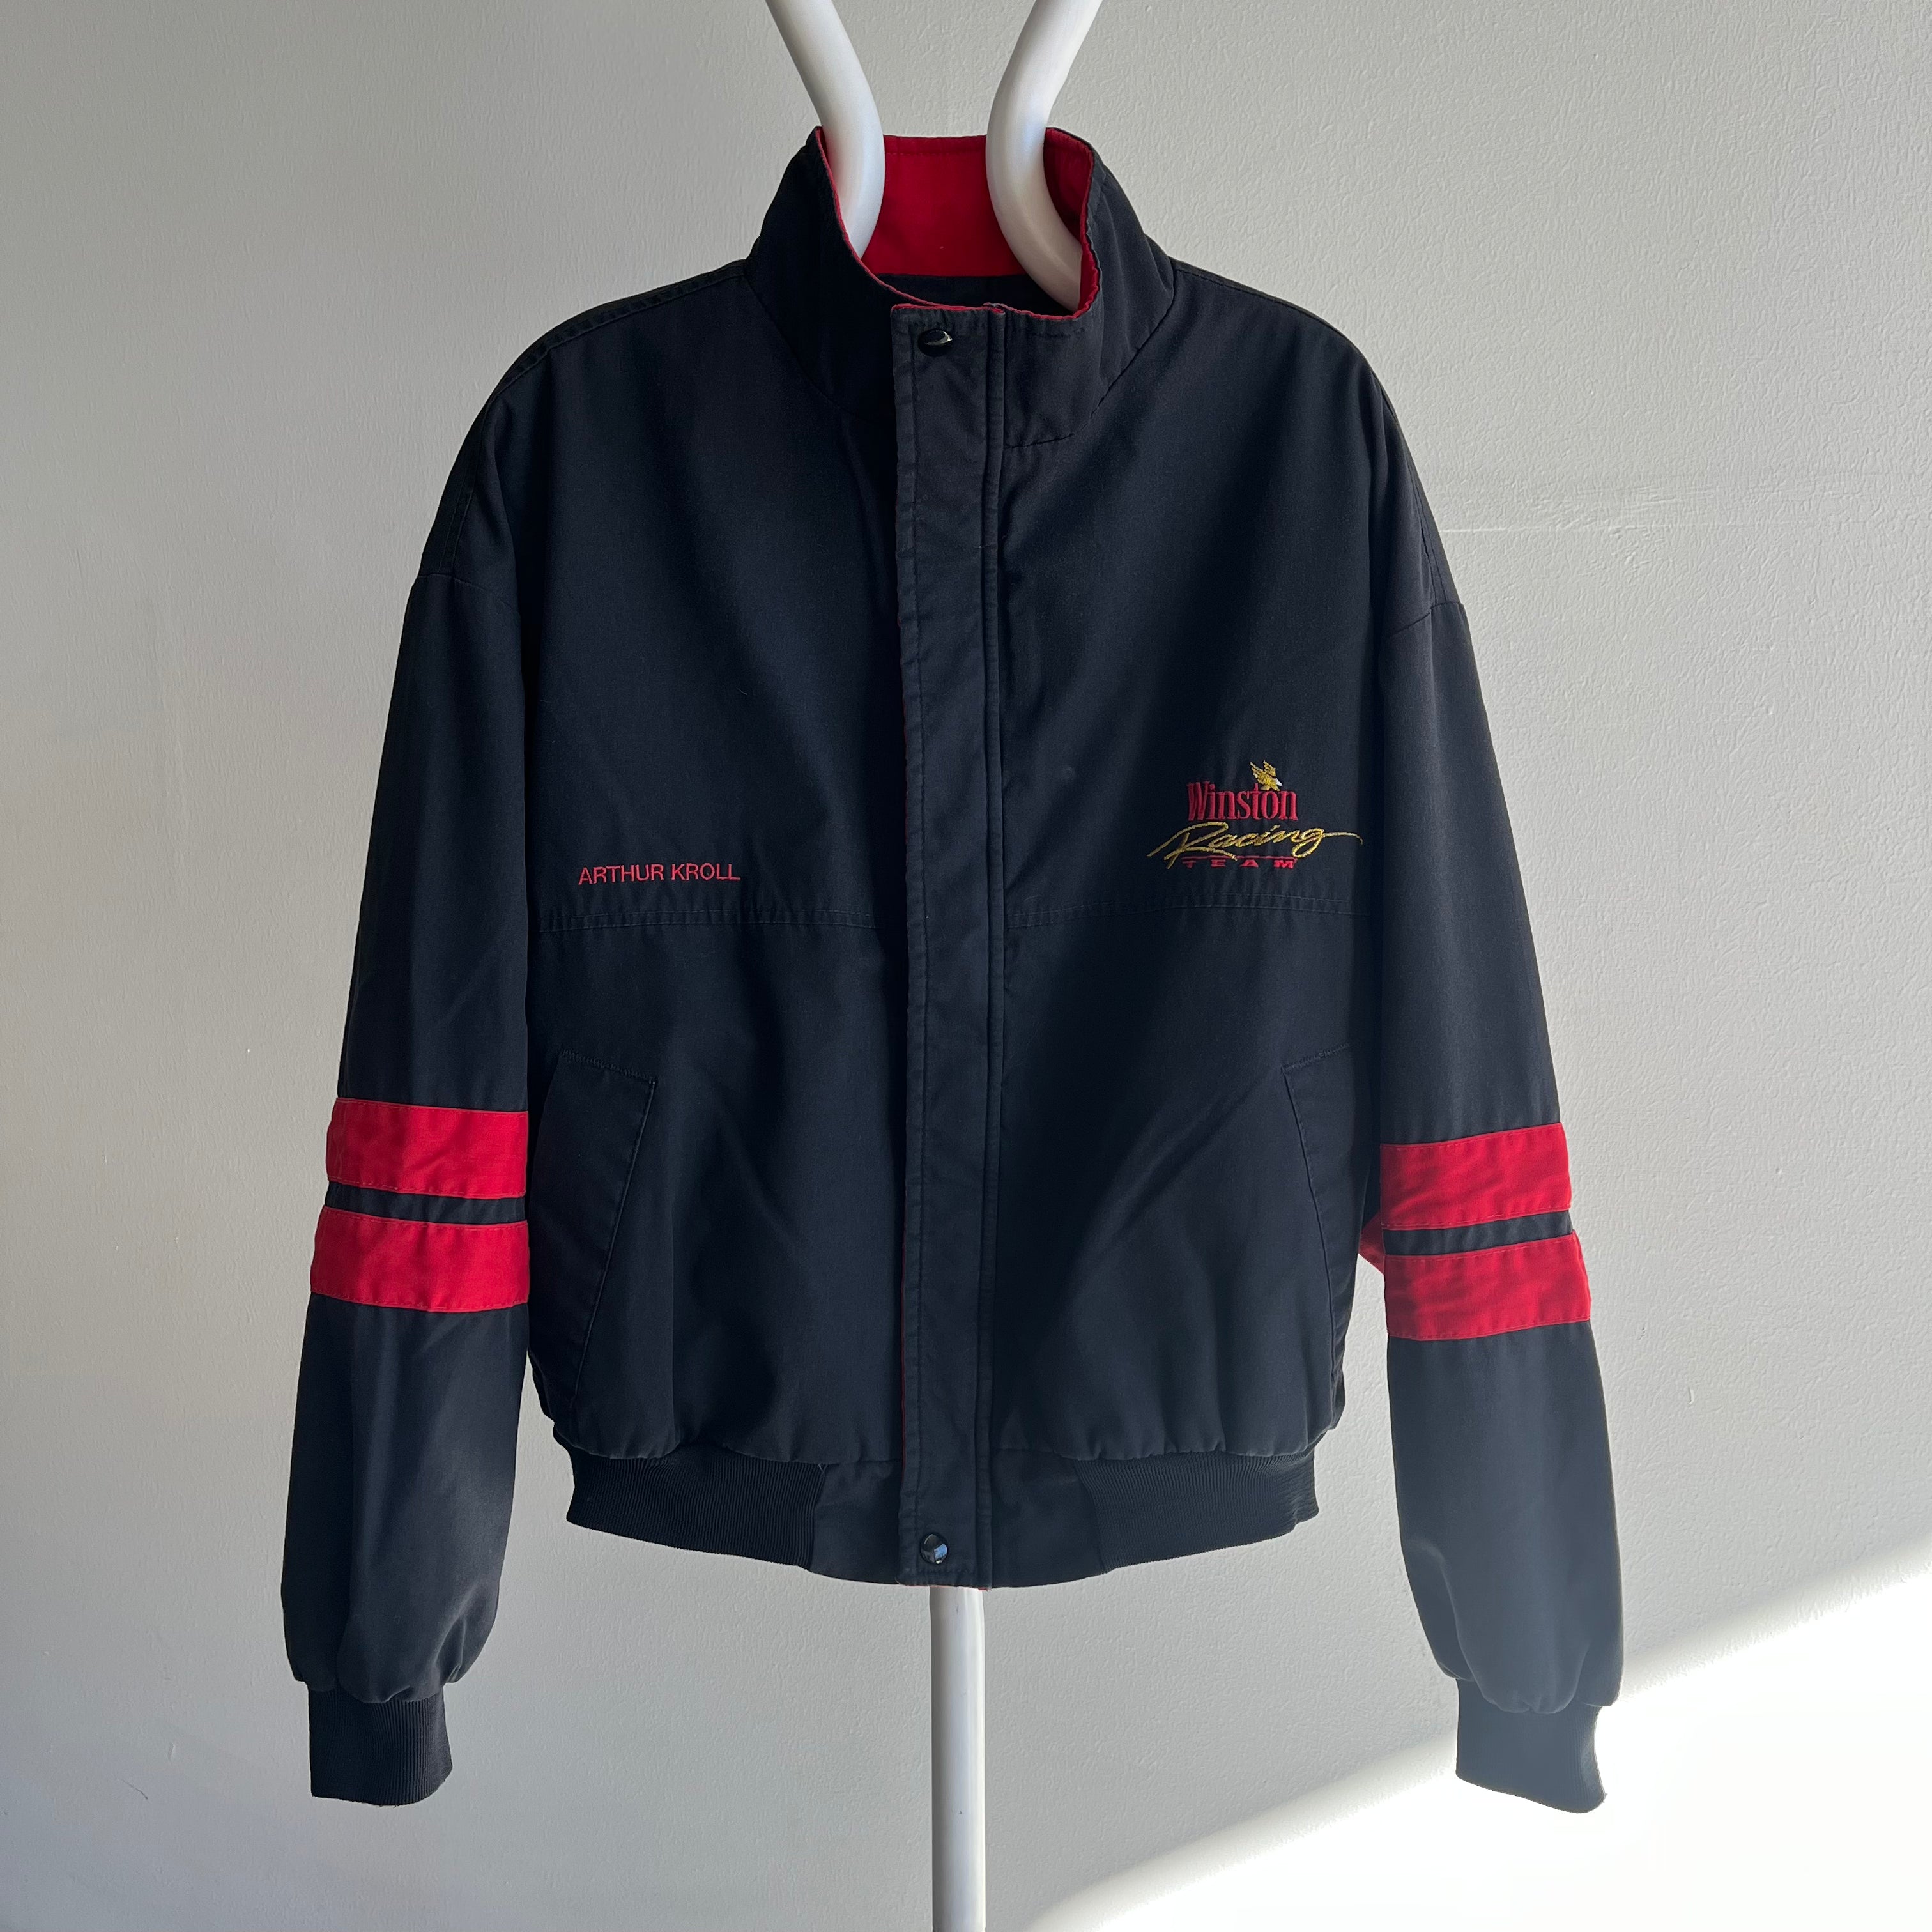 1990s Winston Racing Lightweight Jacket That Belonged to Arthur Kroll